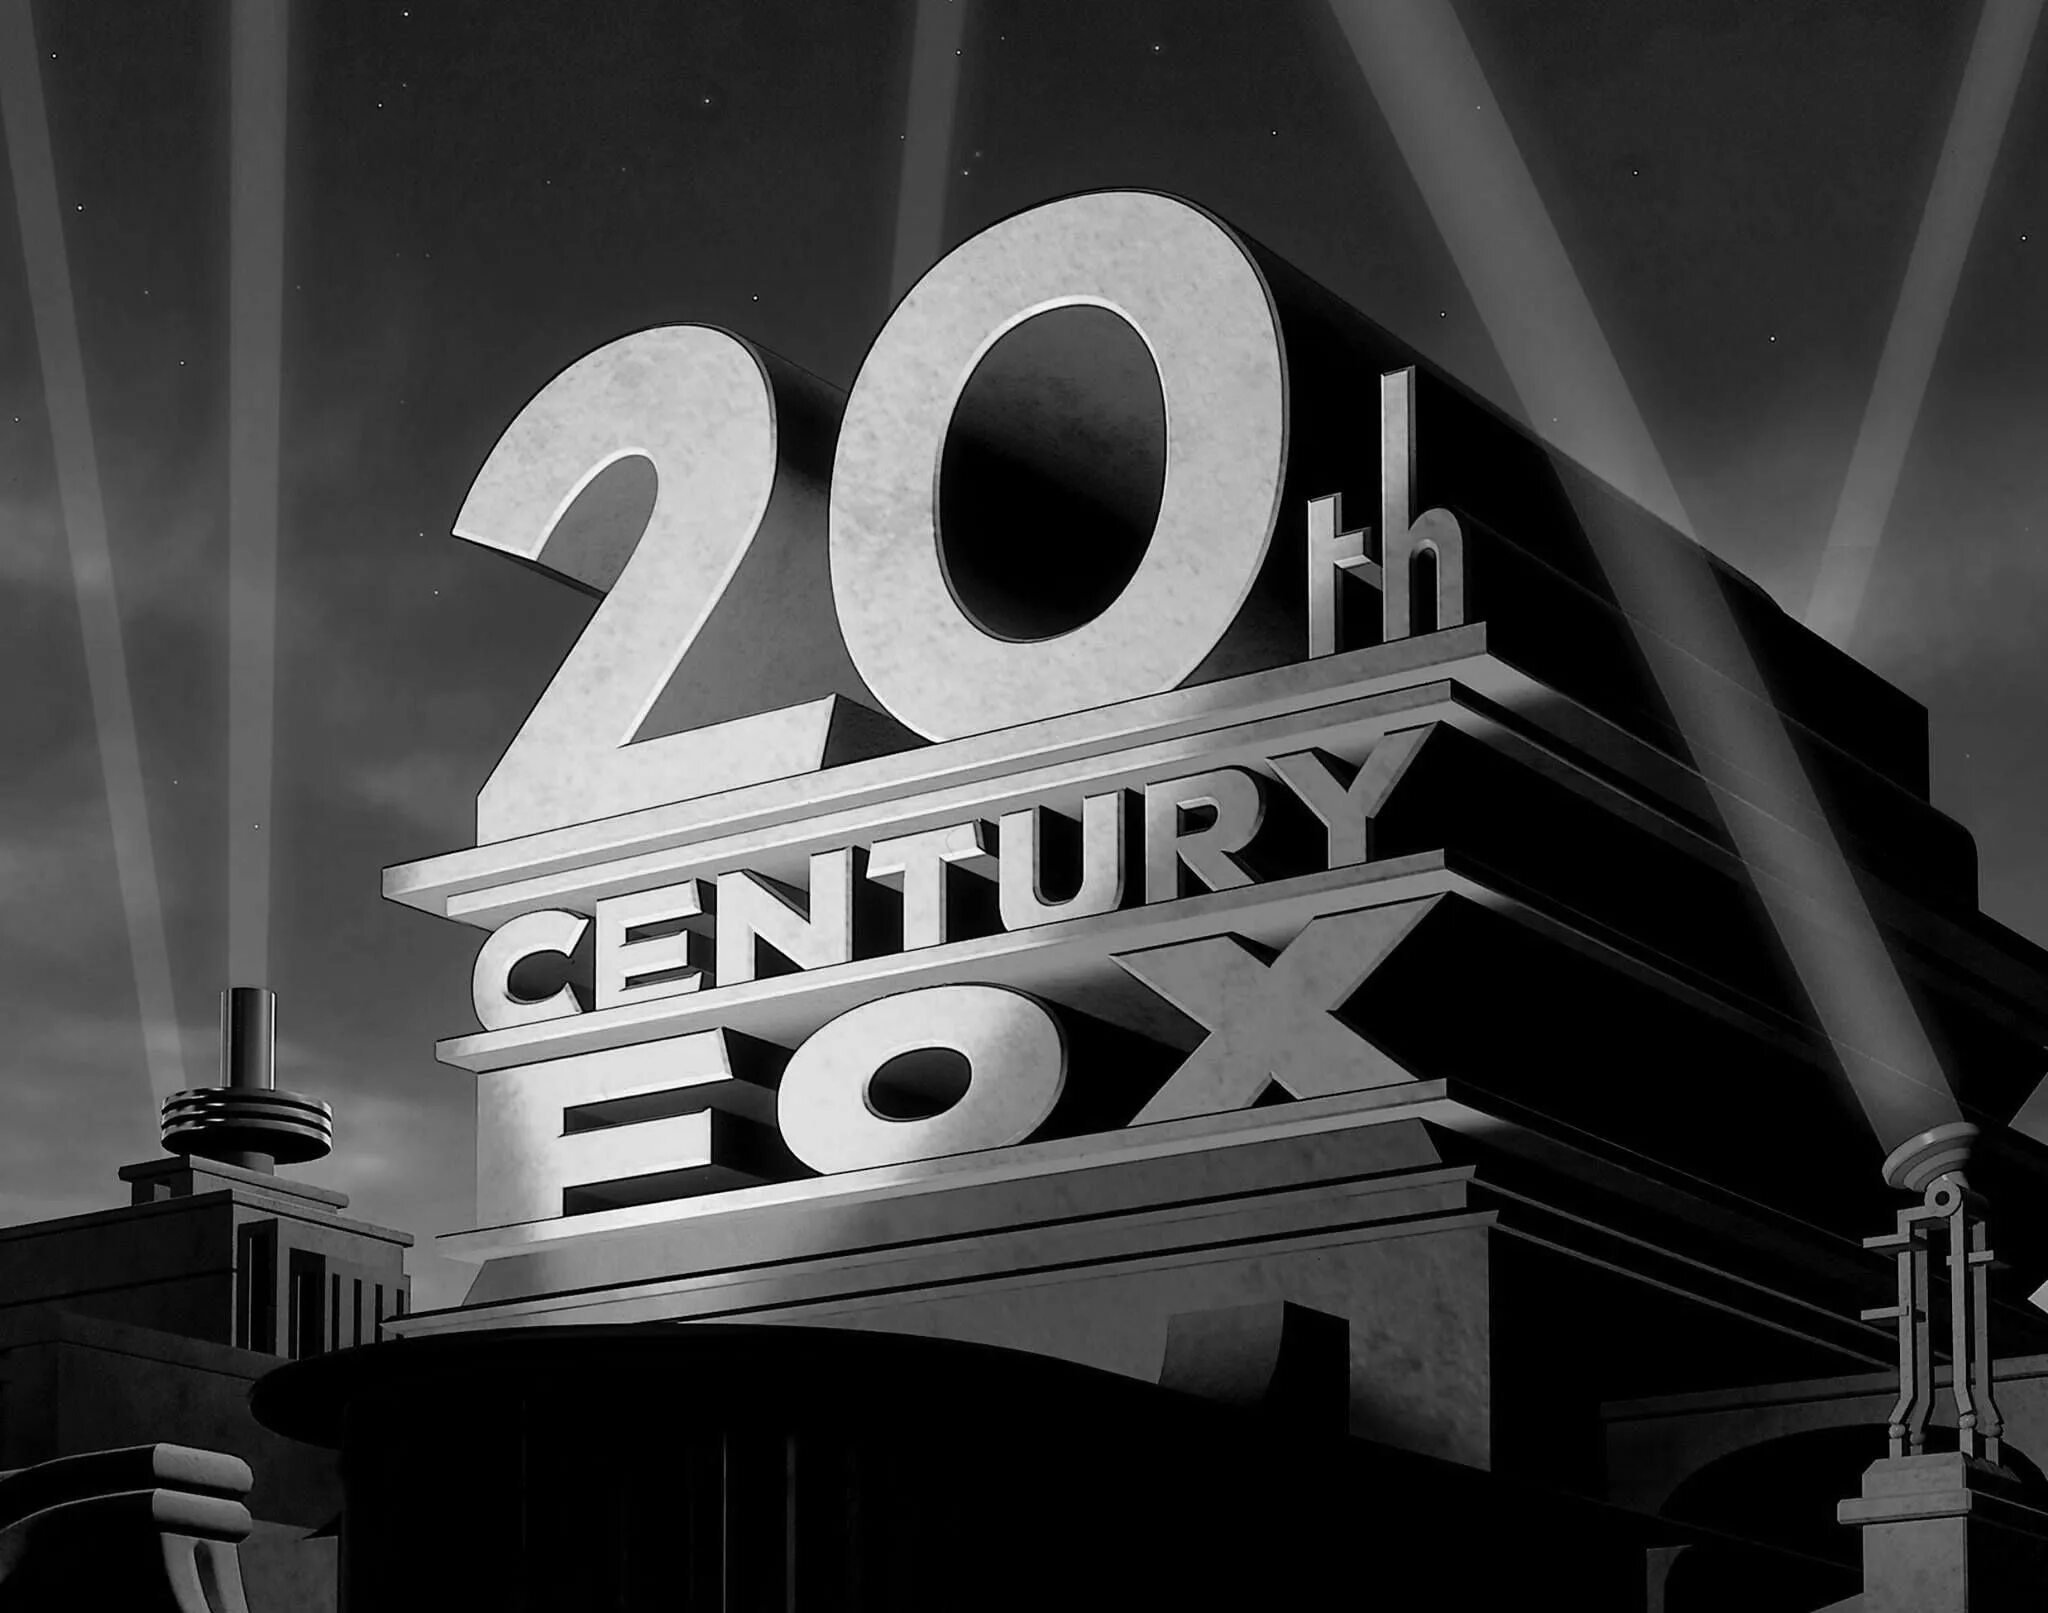 Заставка fox. 20 Век Fox. 20 Век Фокс Пикчерз. 20th Century Fox logo. 20 Век Центури Фокс.